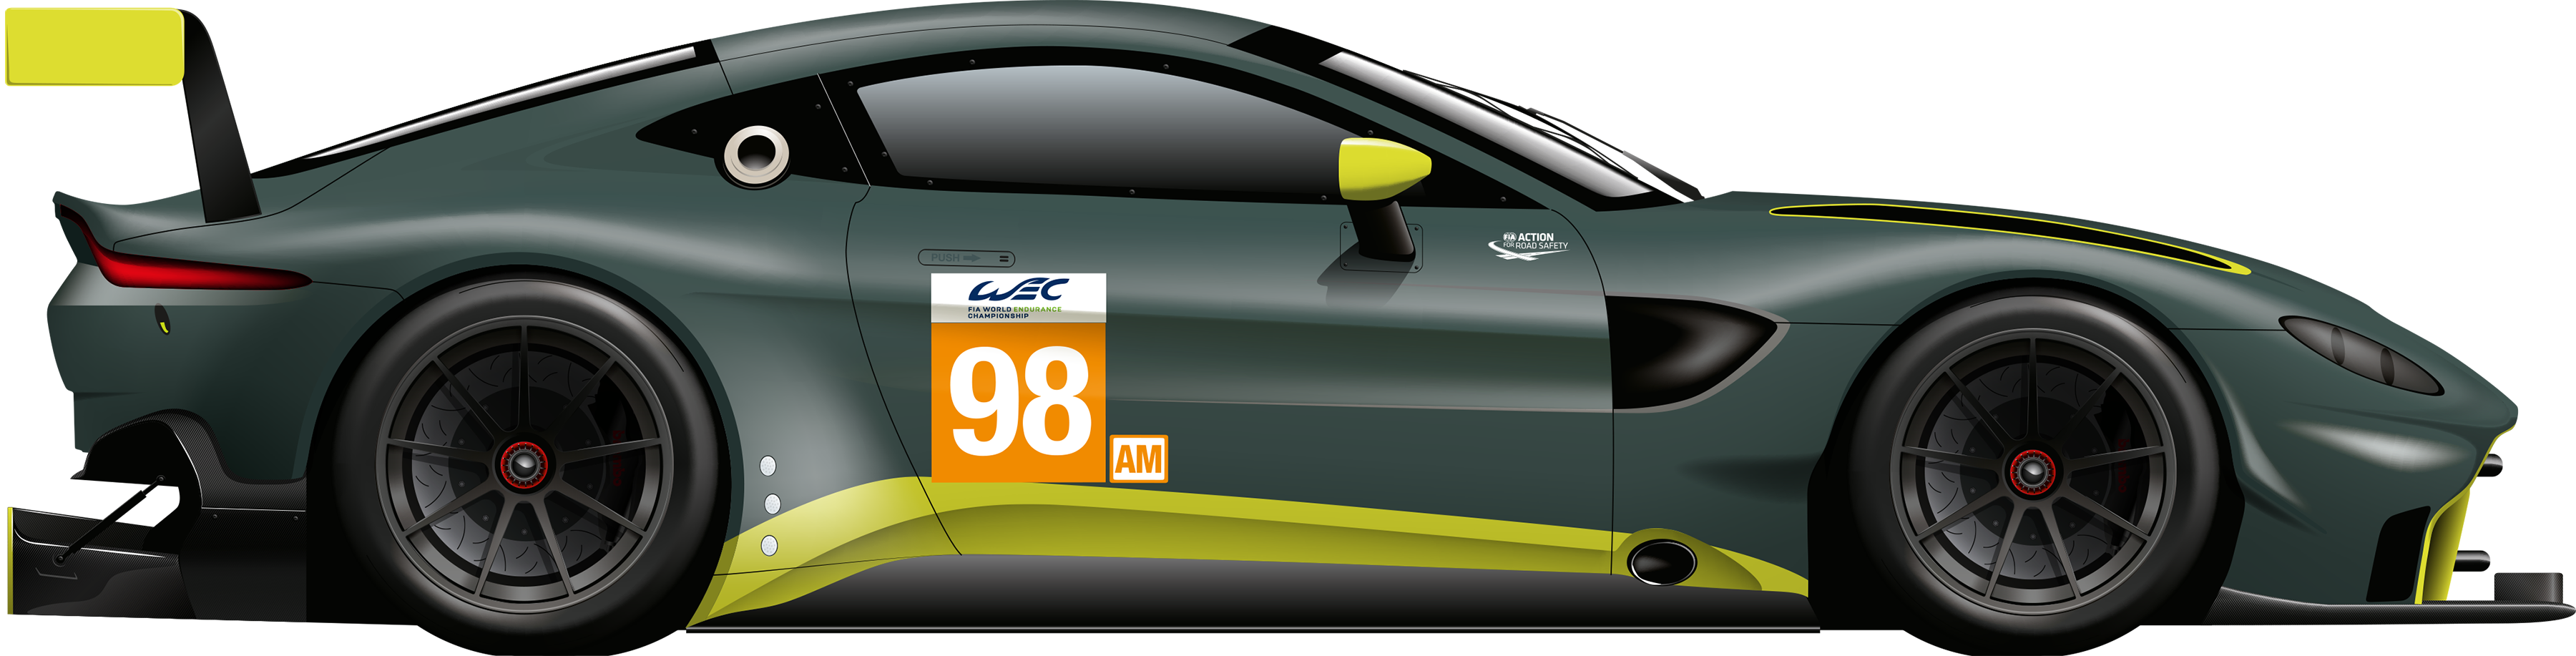 #98 - Aston Martin VANTAGE AMR - FIA World Endurance Championship